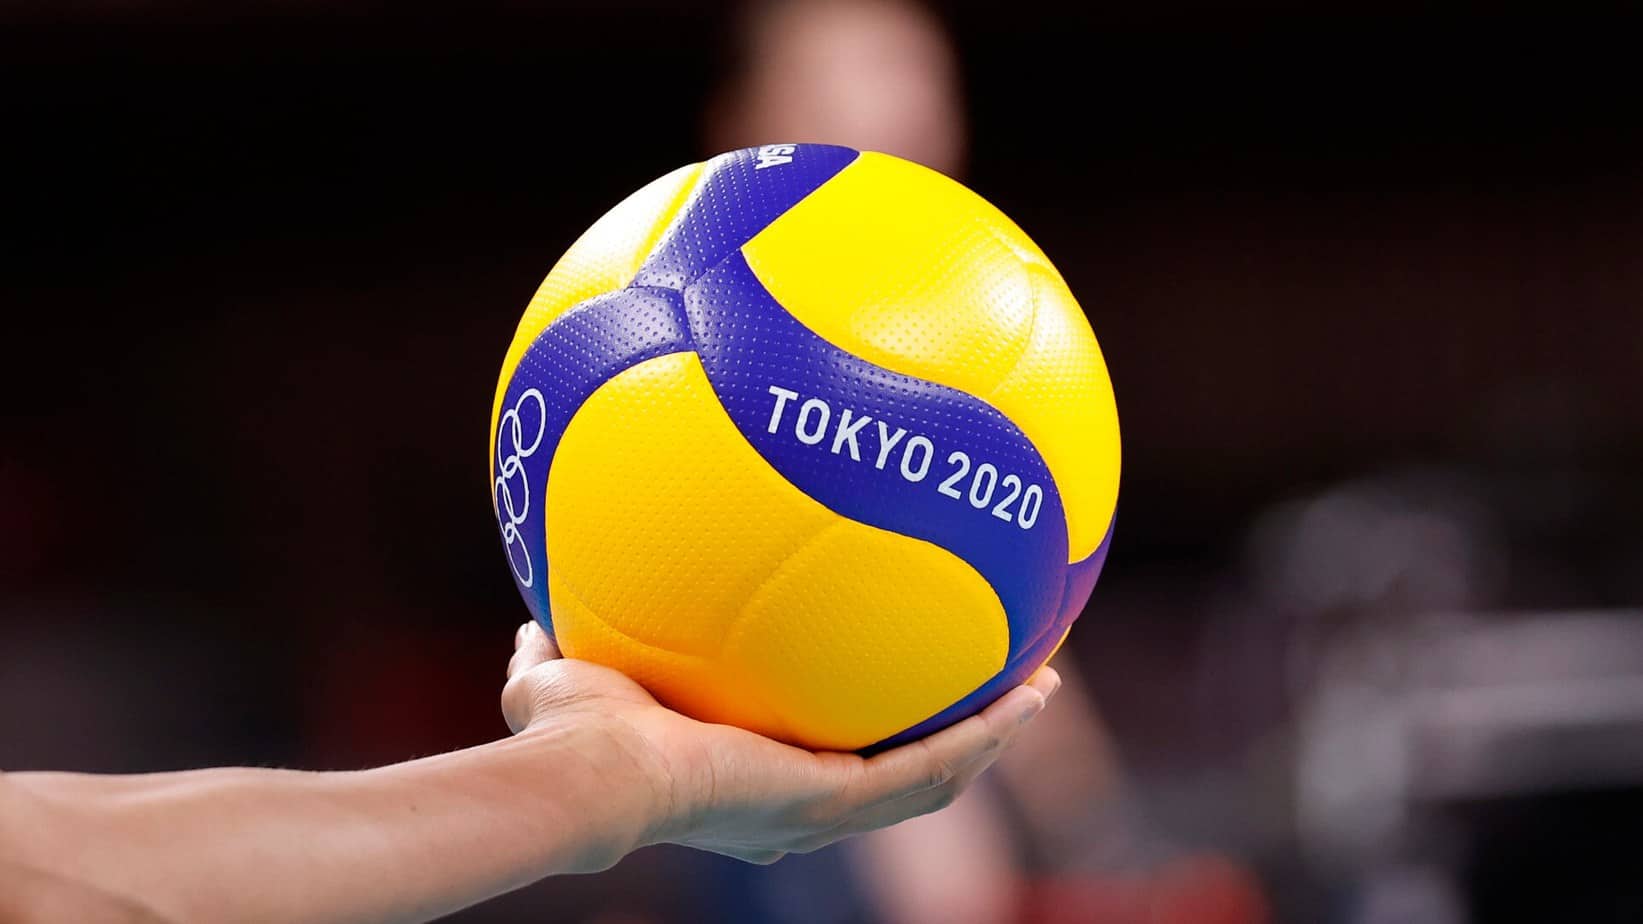 Probabilidades de apostas nas semifinais masculinas do vôlei olímpico Tóquio 2020